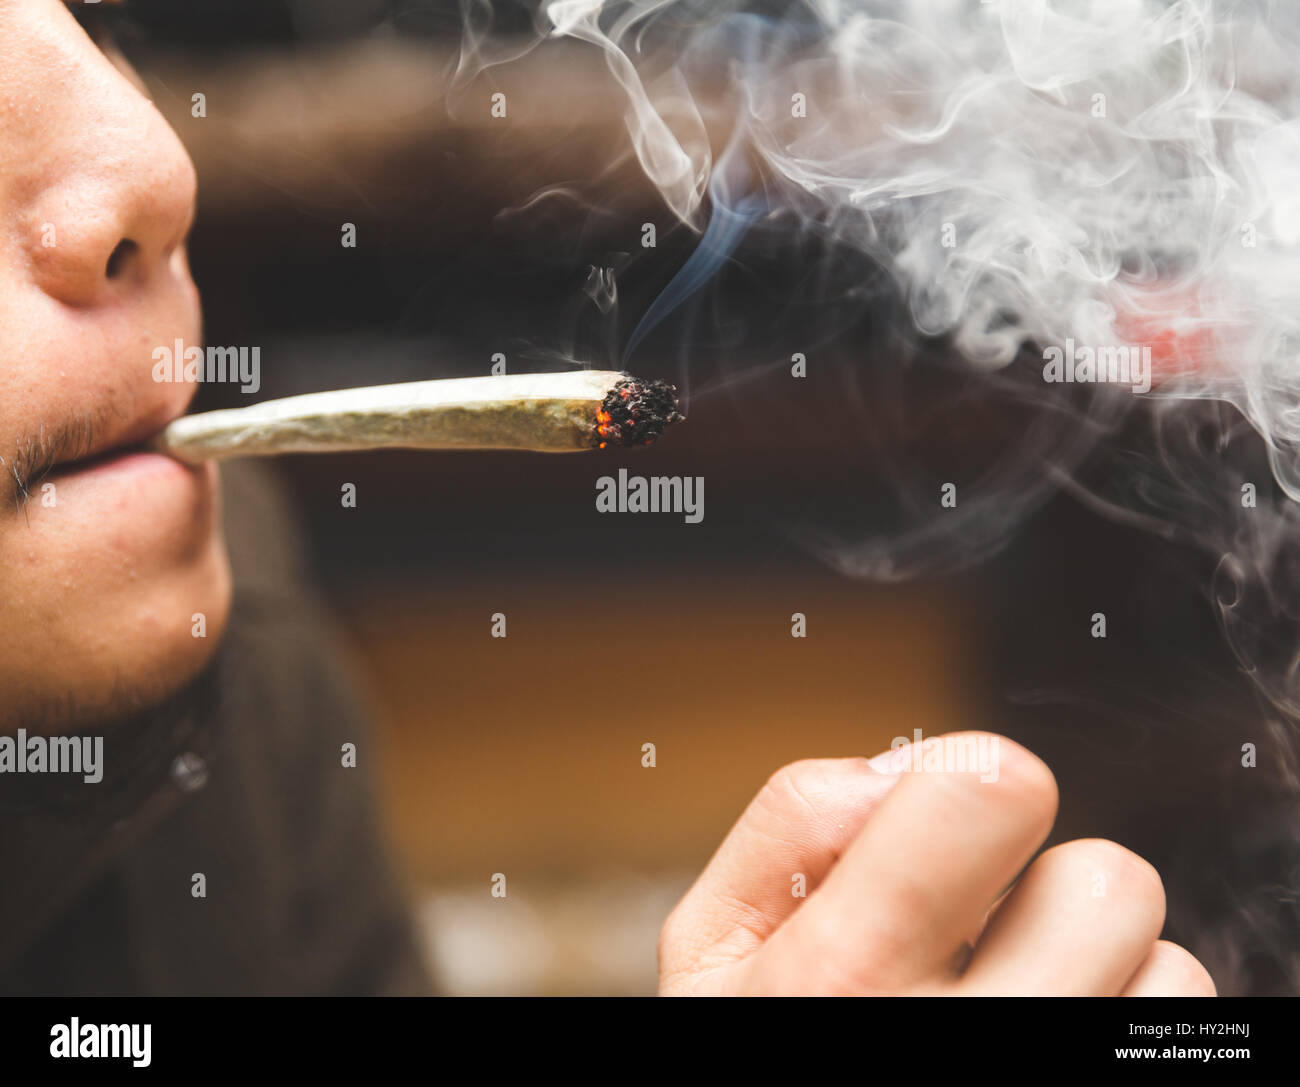 Man smoking joint, cigarette, or spliff. Stock Photo